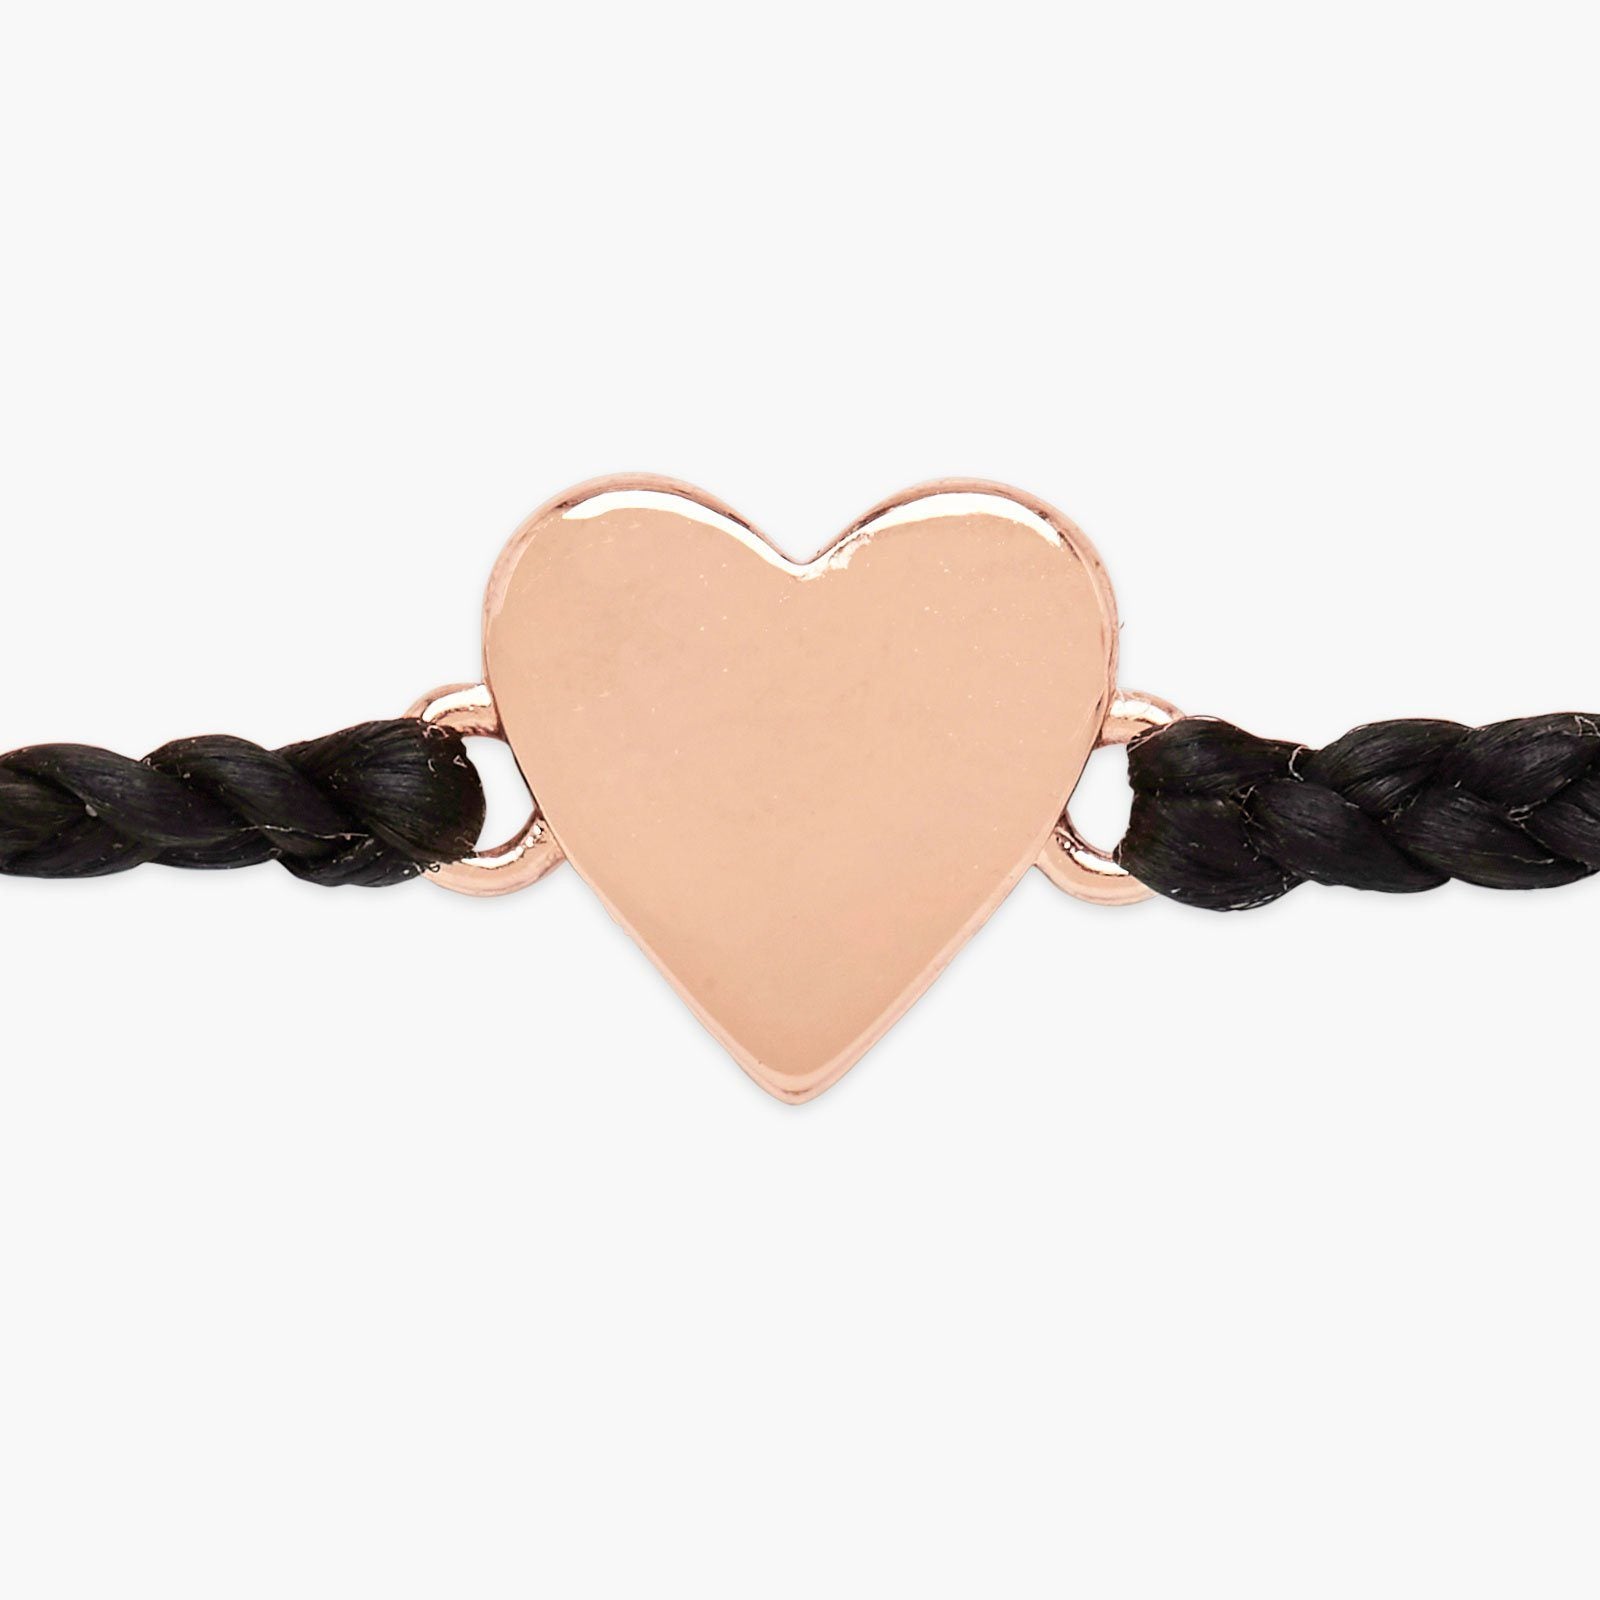 Luxury Bracelet LV - Hearted Charm